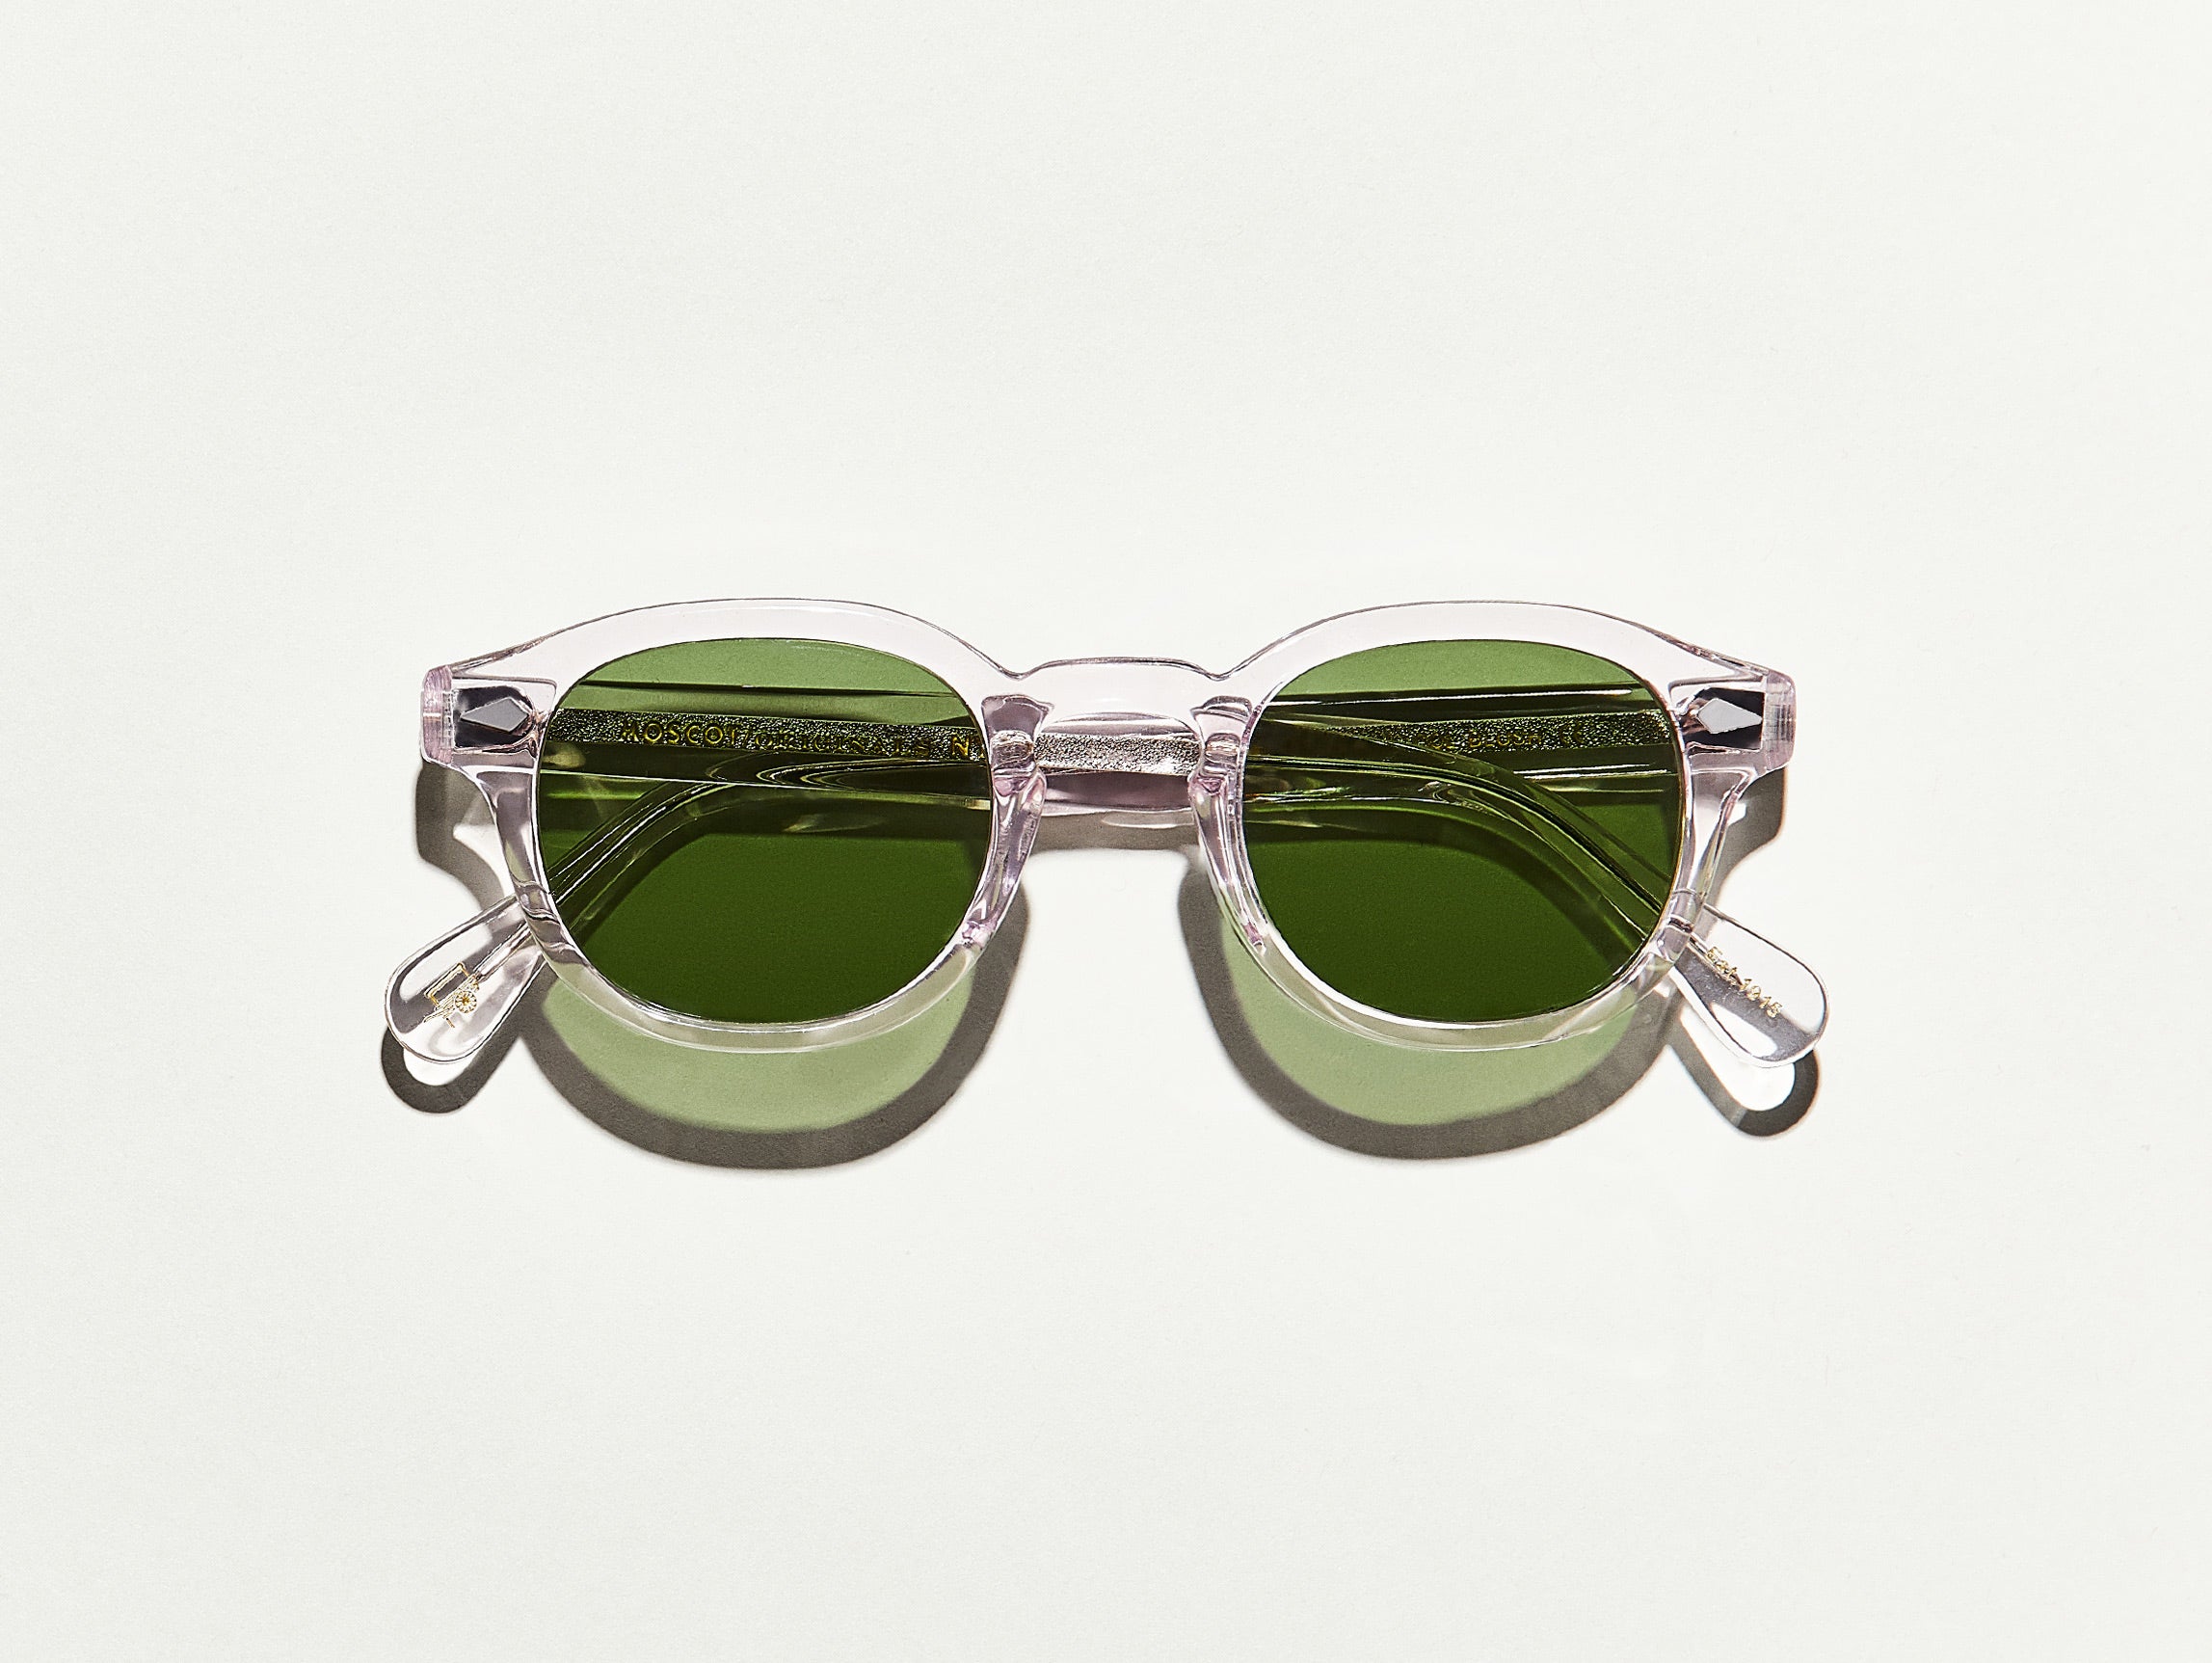 The LEMTOSH SUN in Blush with Calibar Green Glass Lenses